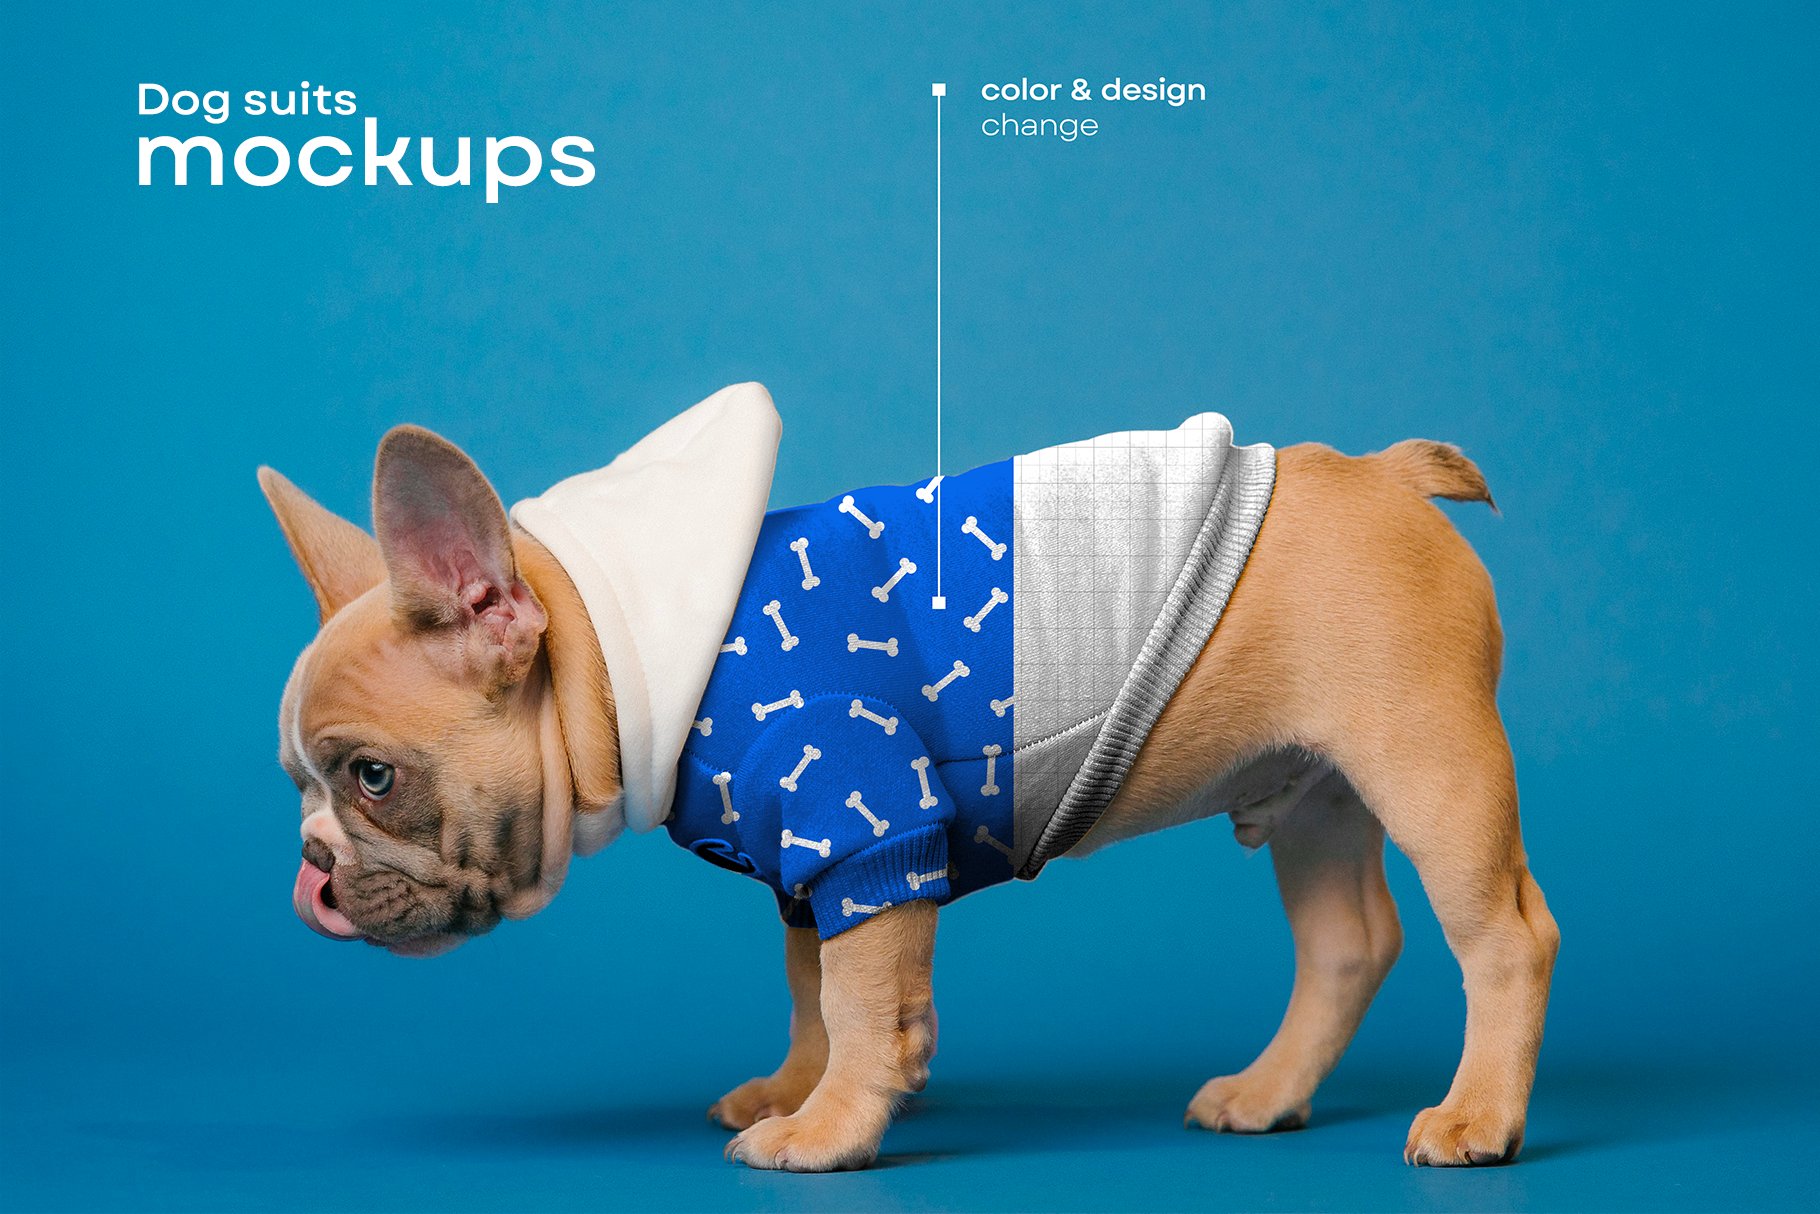 Dog Suits Mockups cover image.